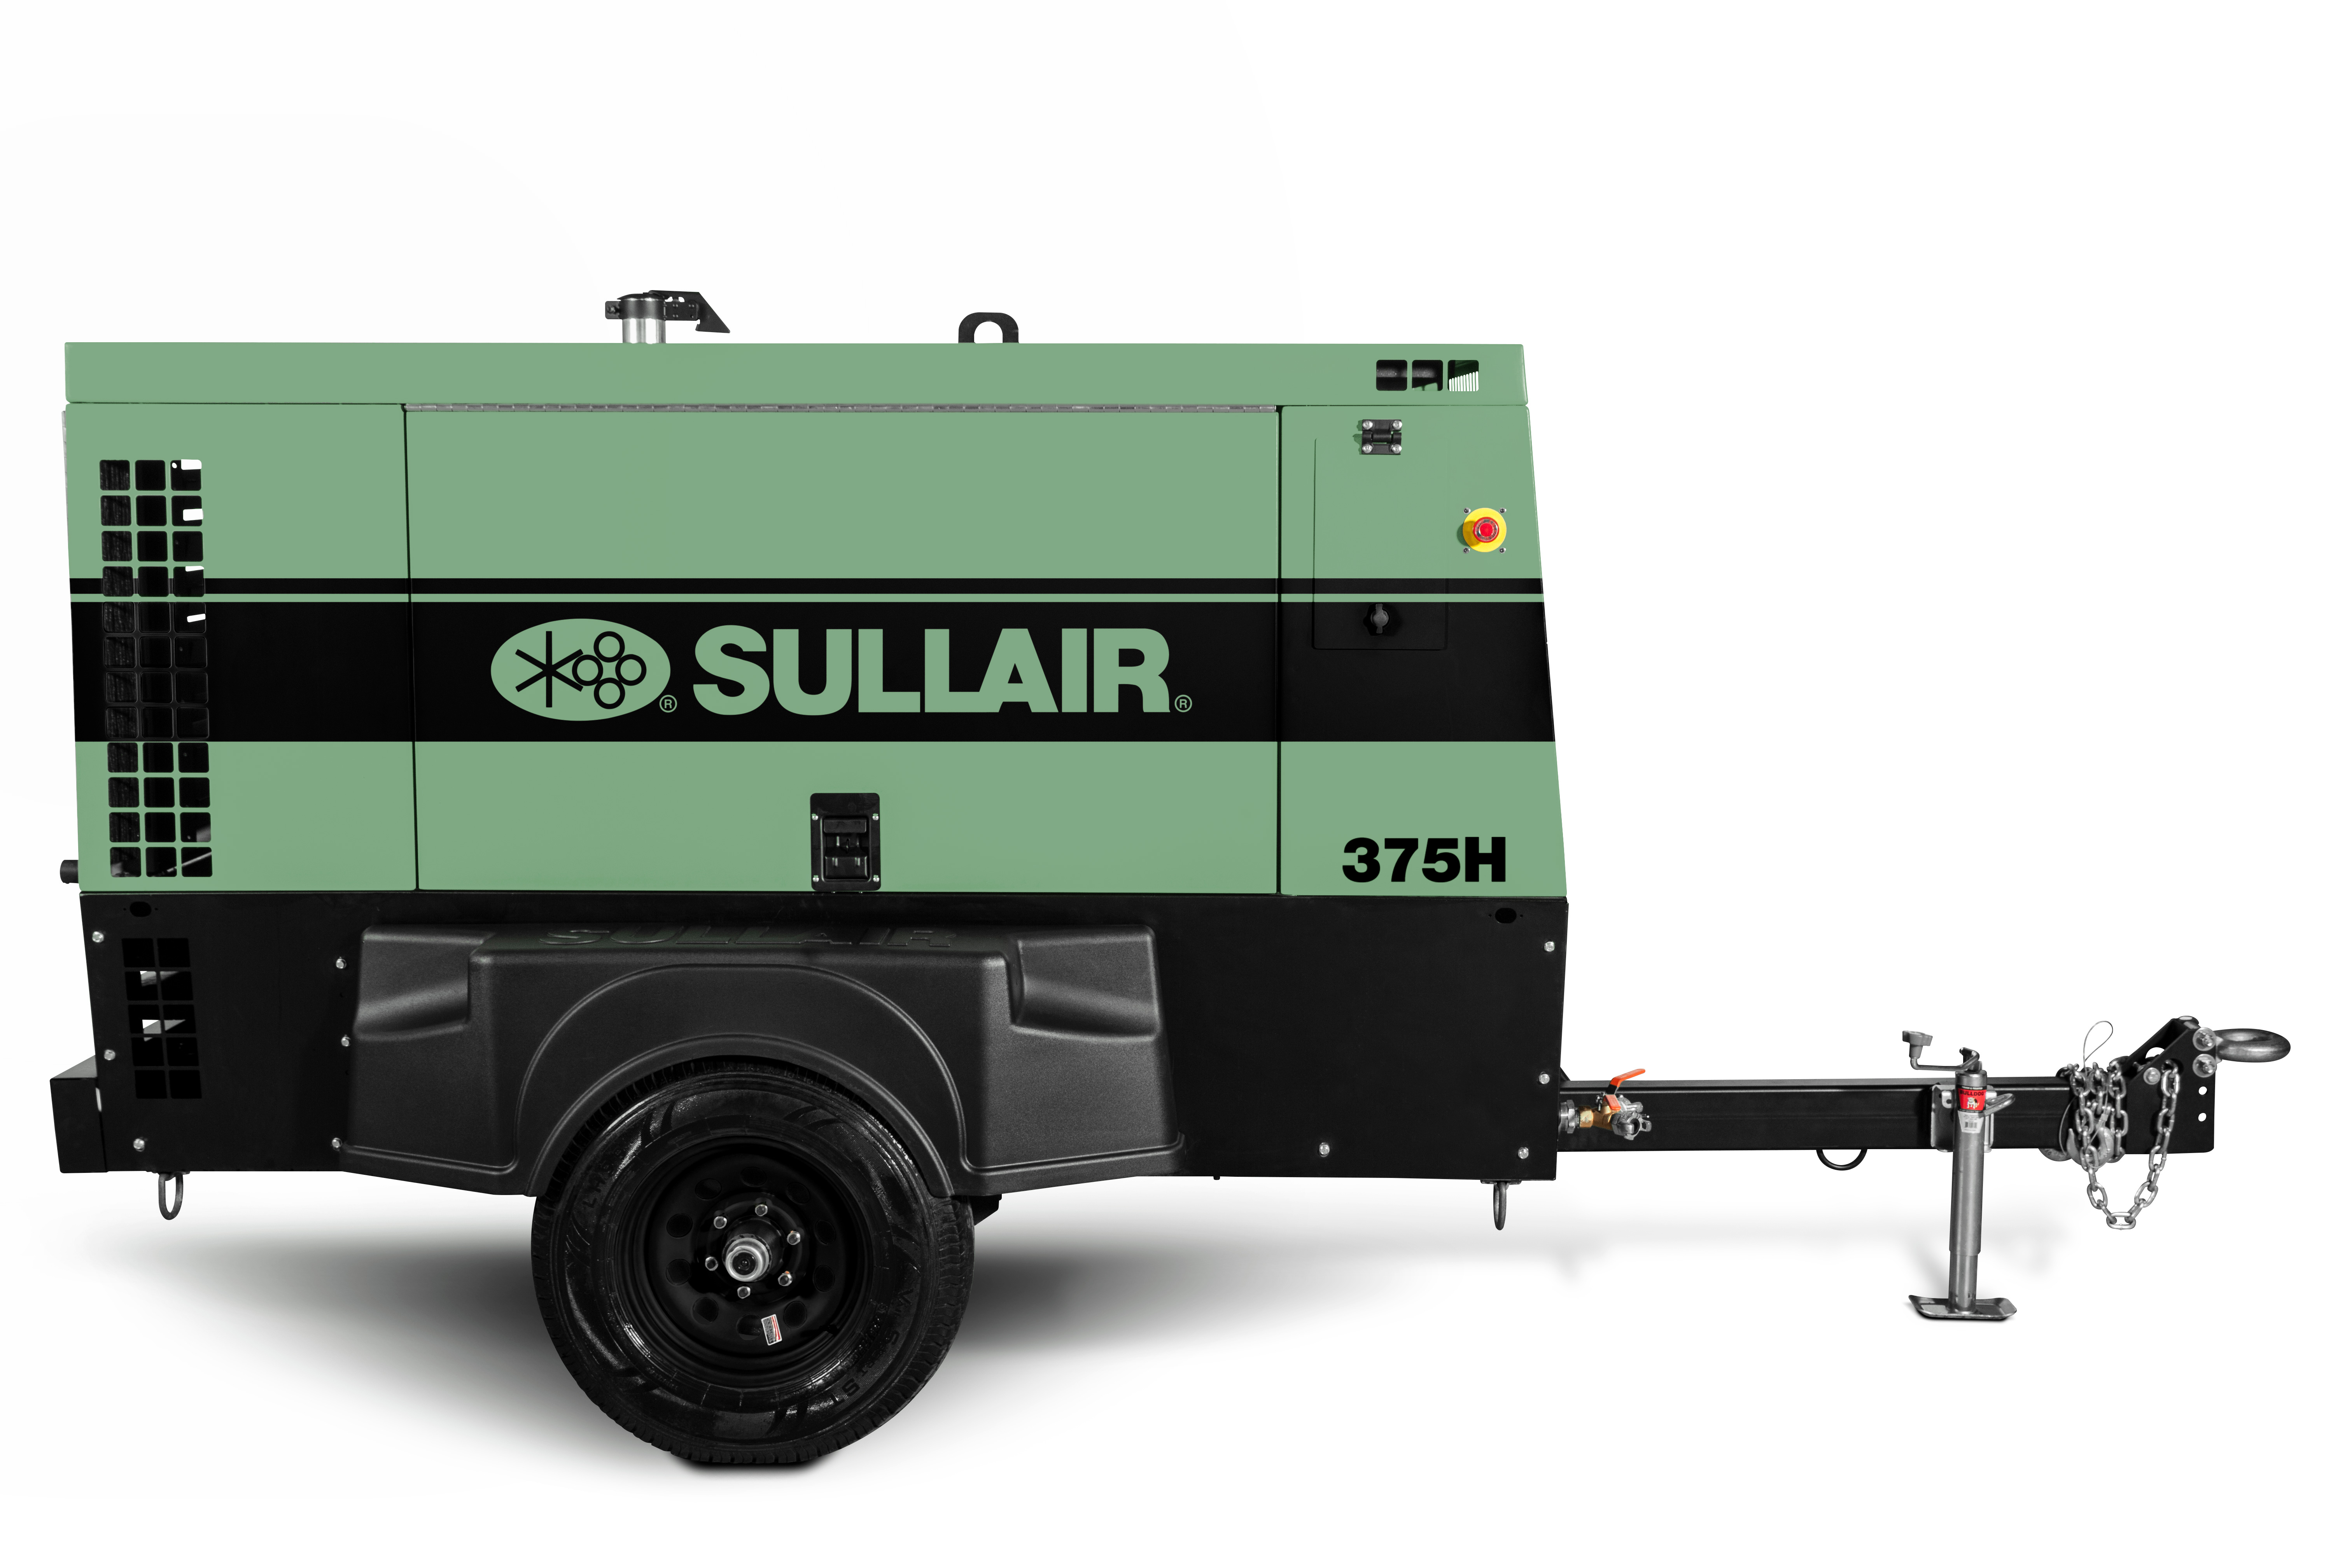 Sullair Perkins-powered 375H portable diesel air compressor